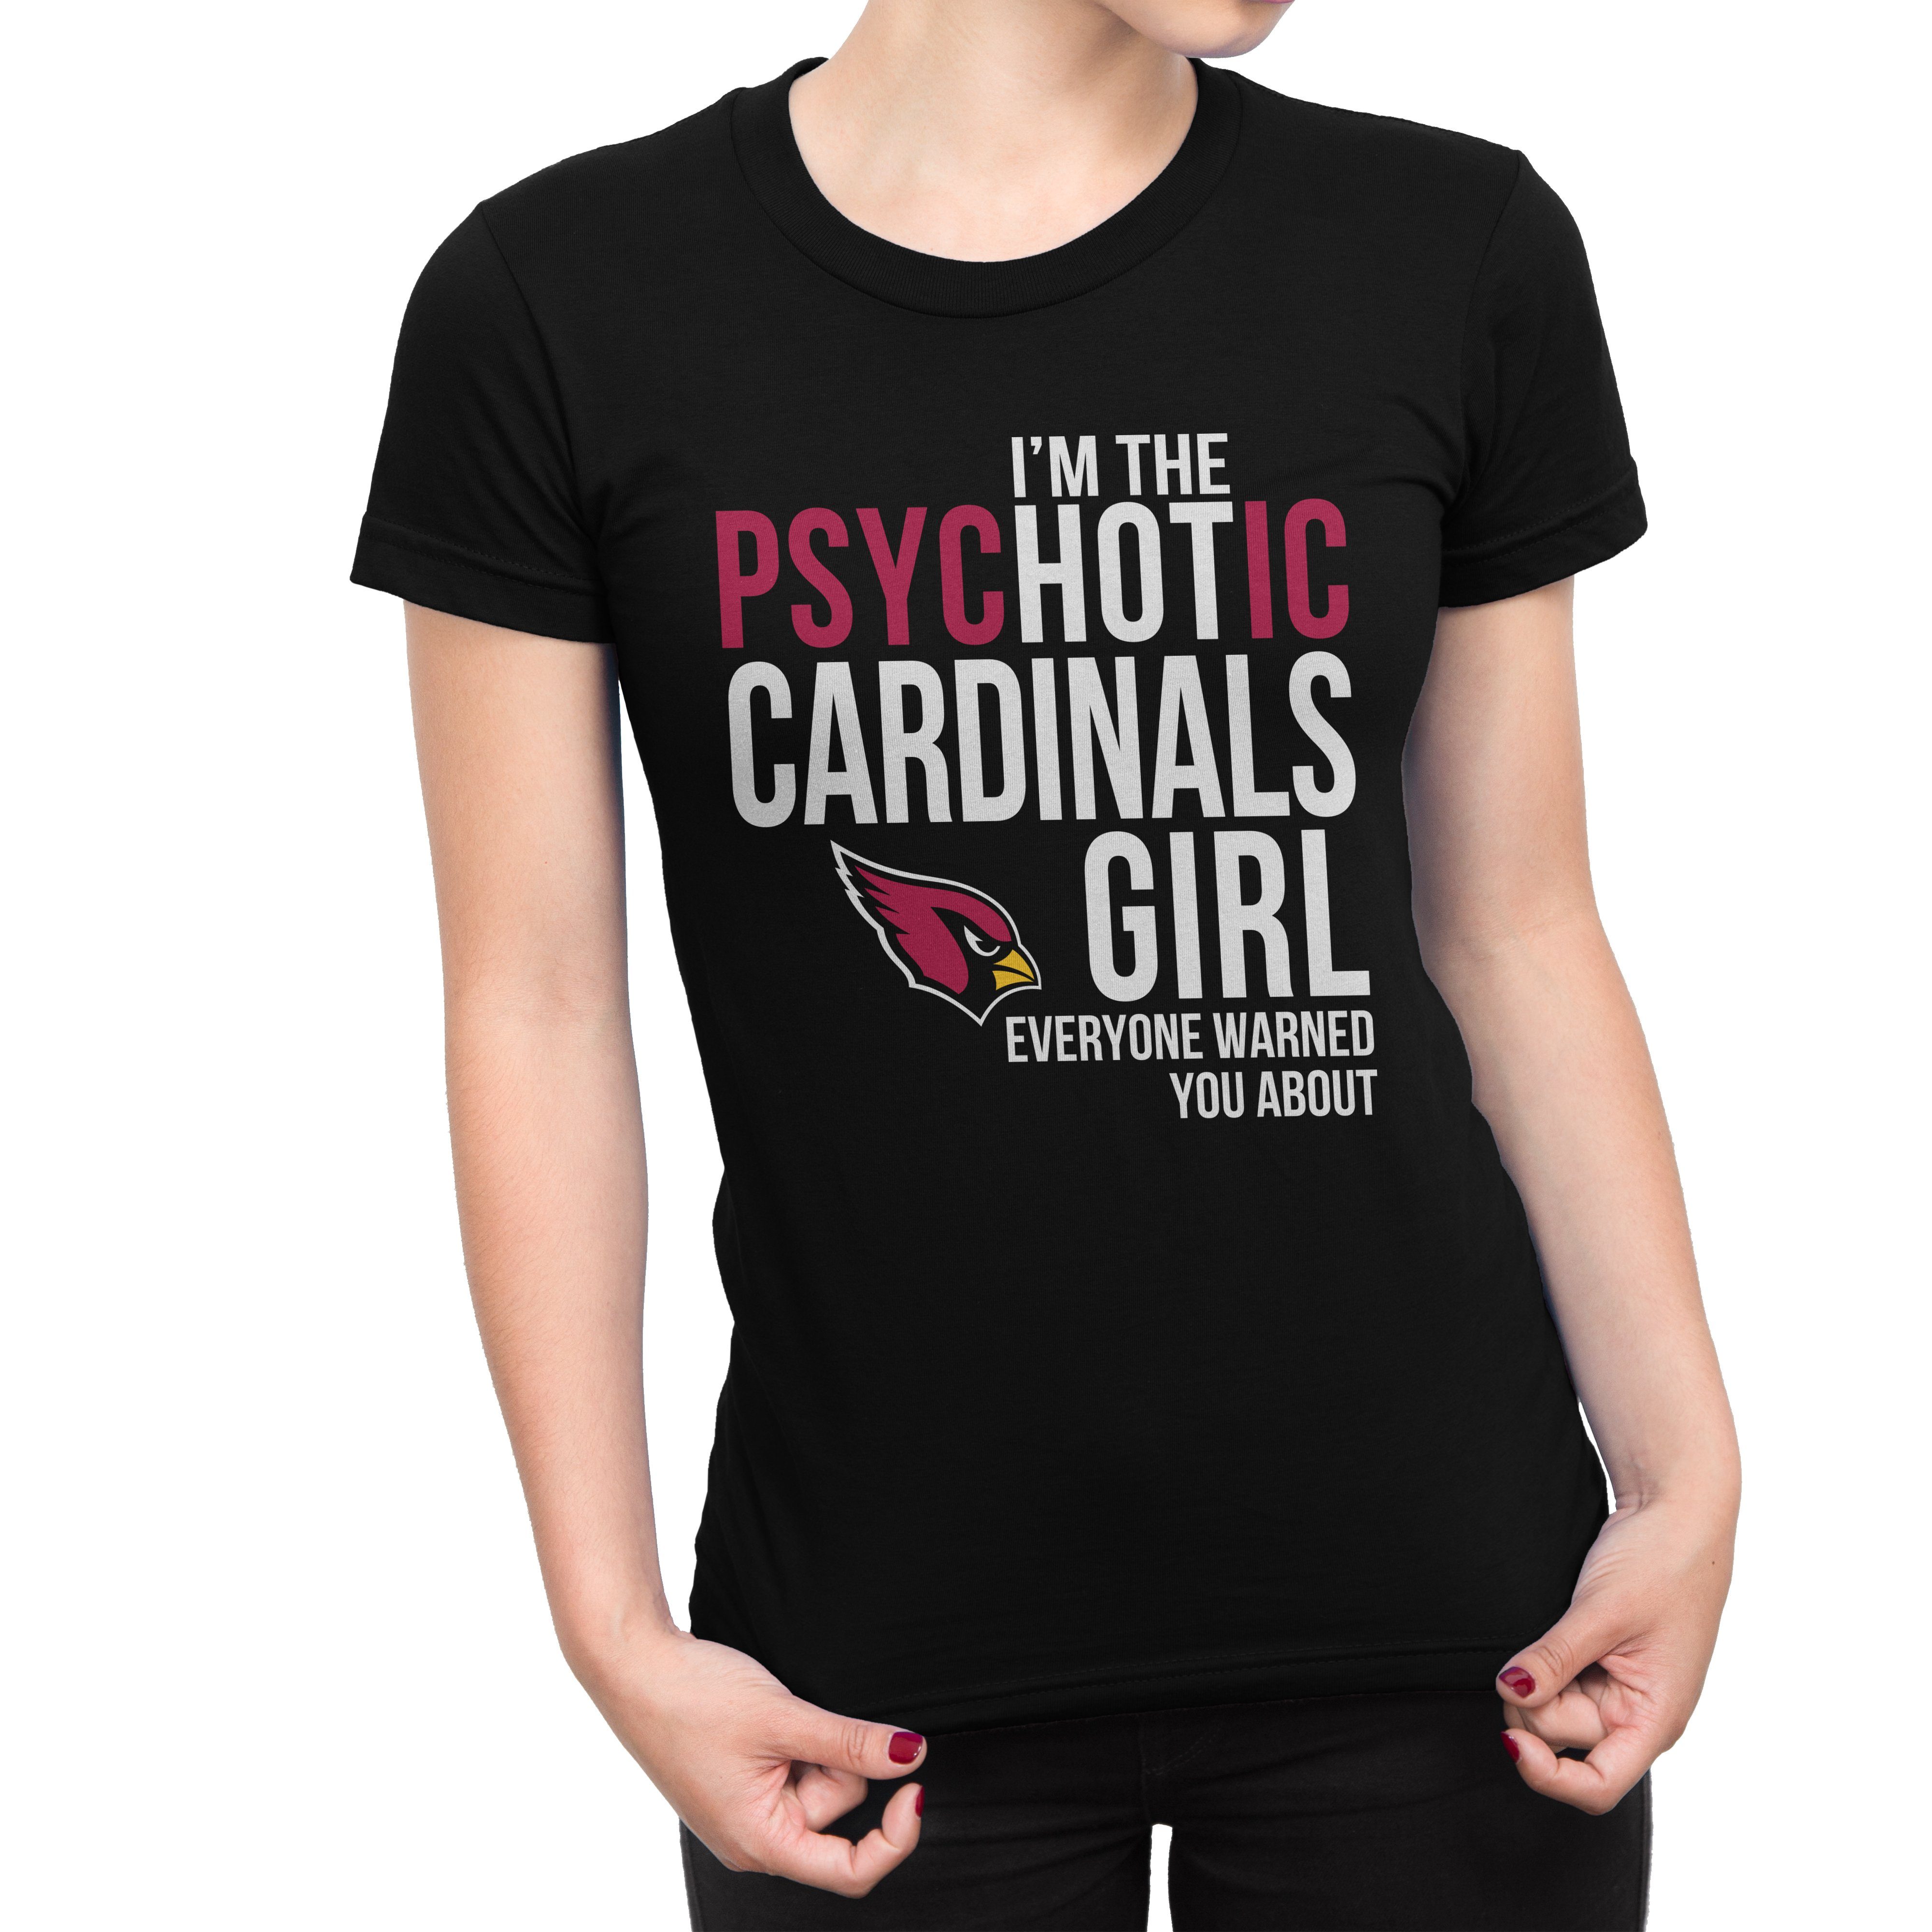 az cardinals ladies shirts